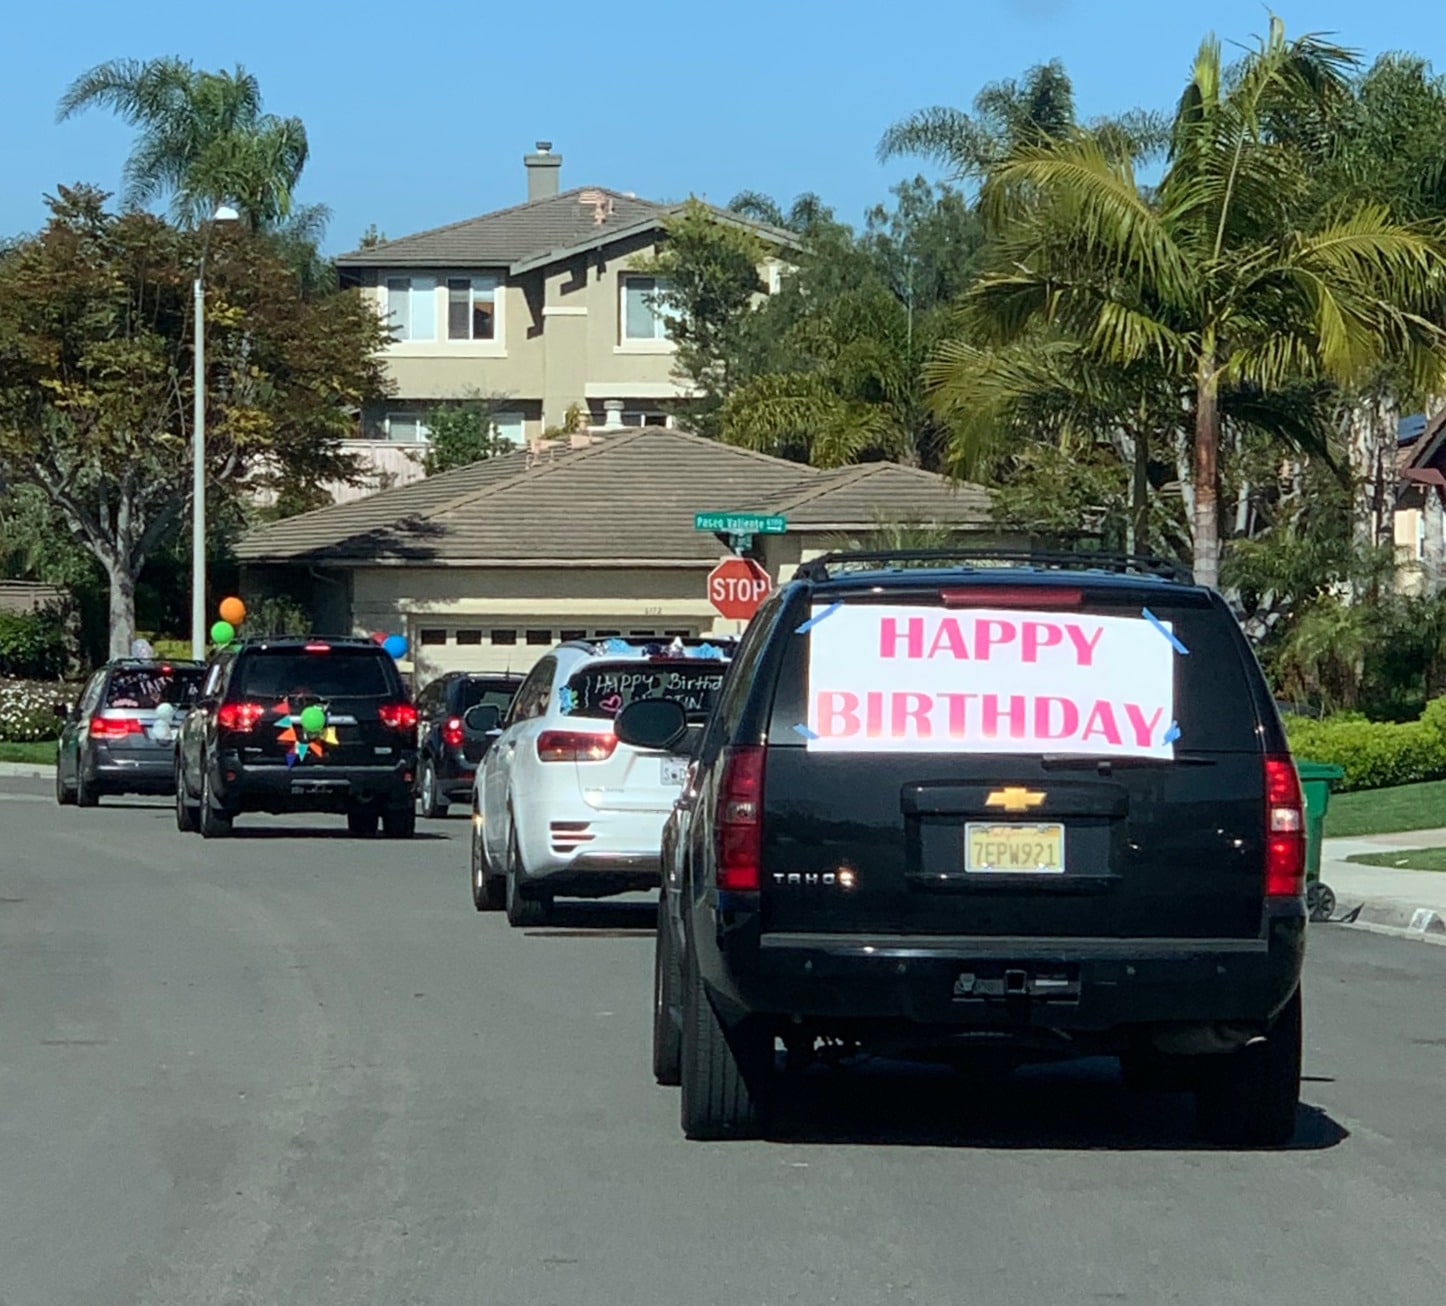 Birthday party caravan of cars